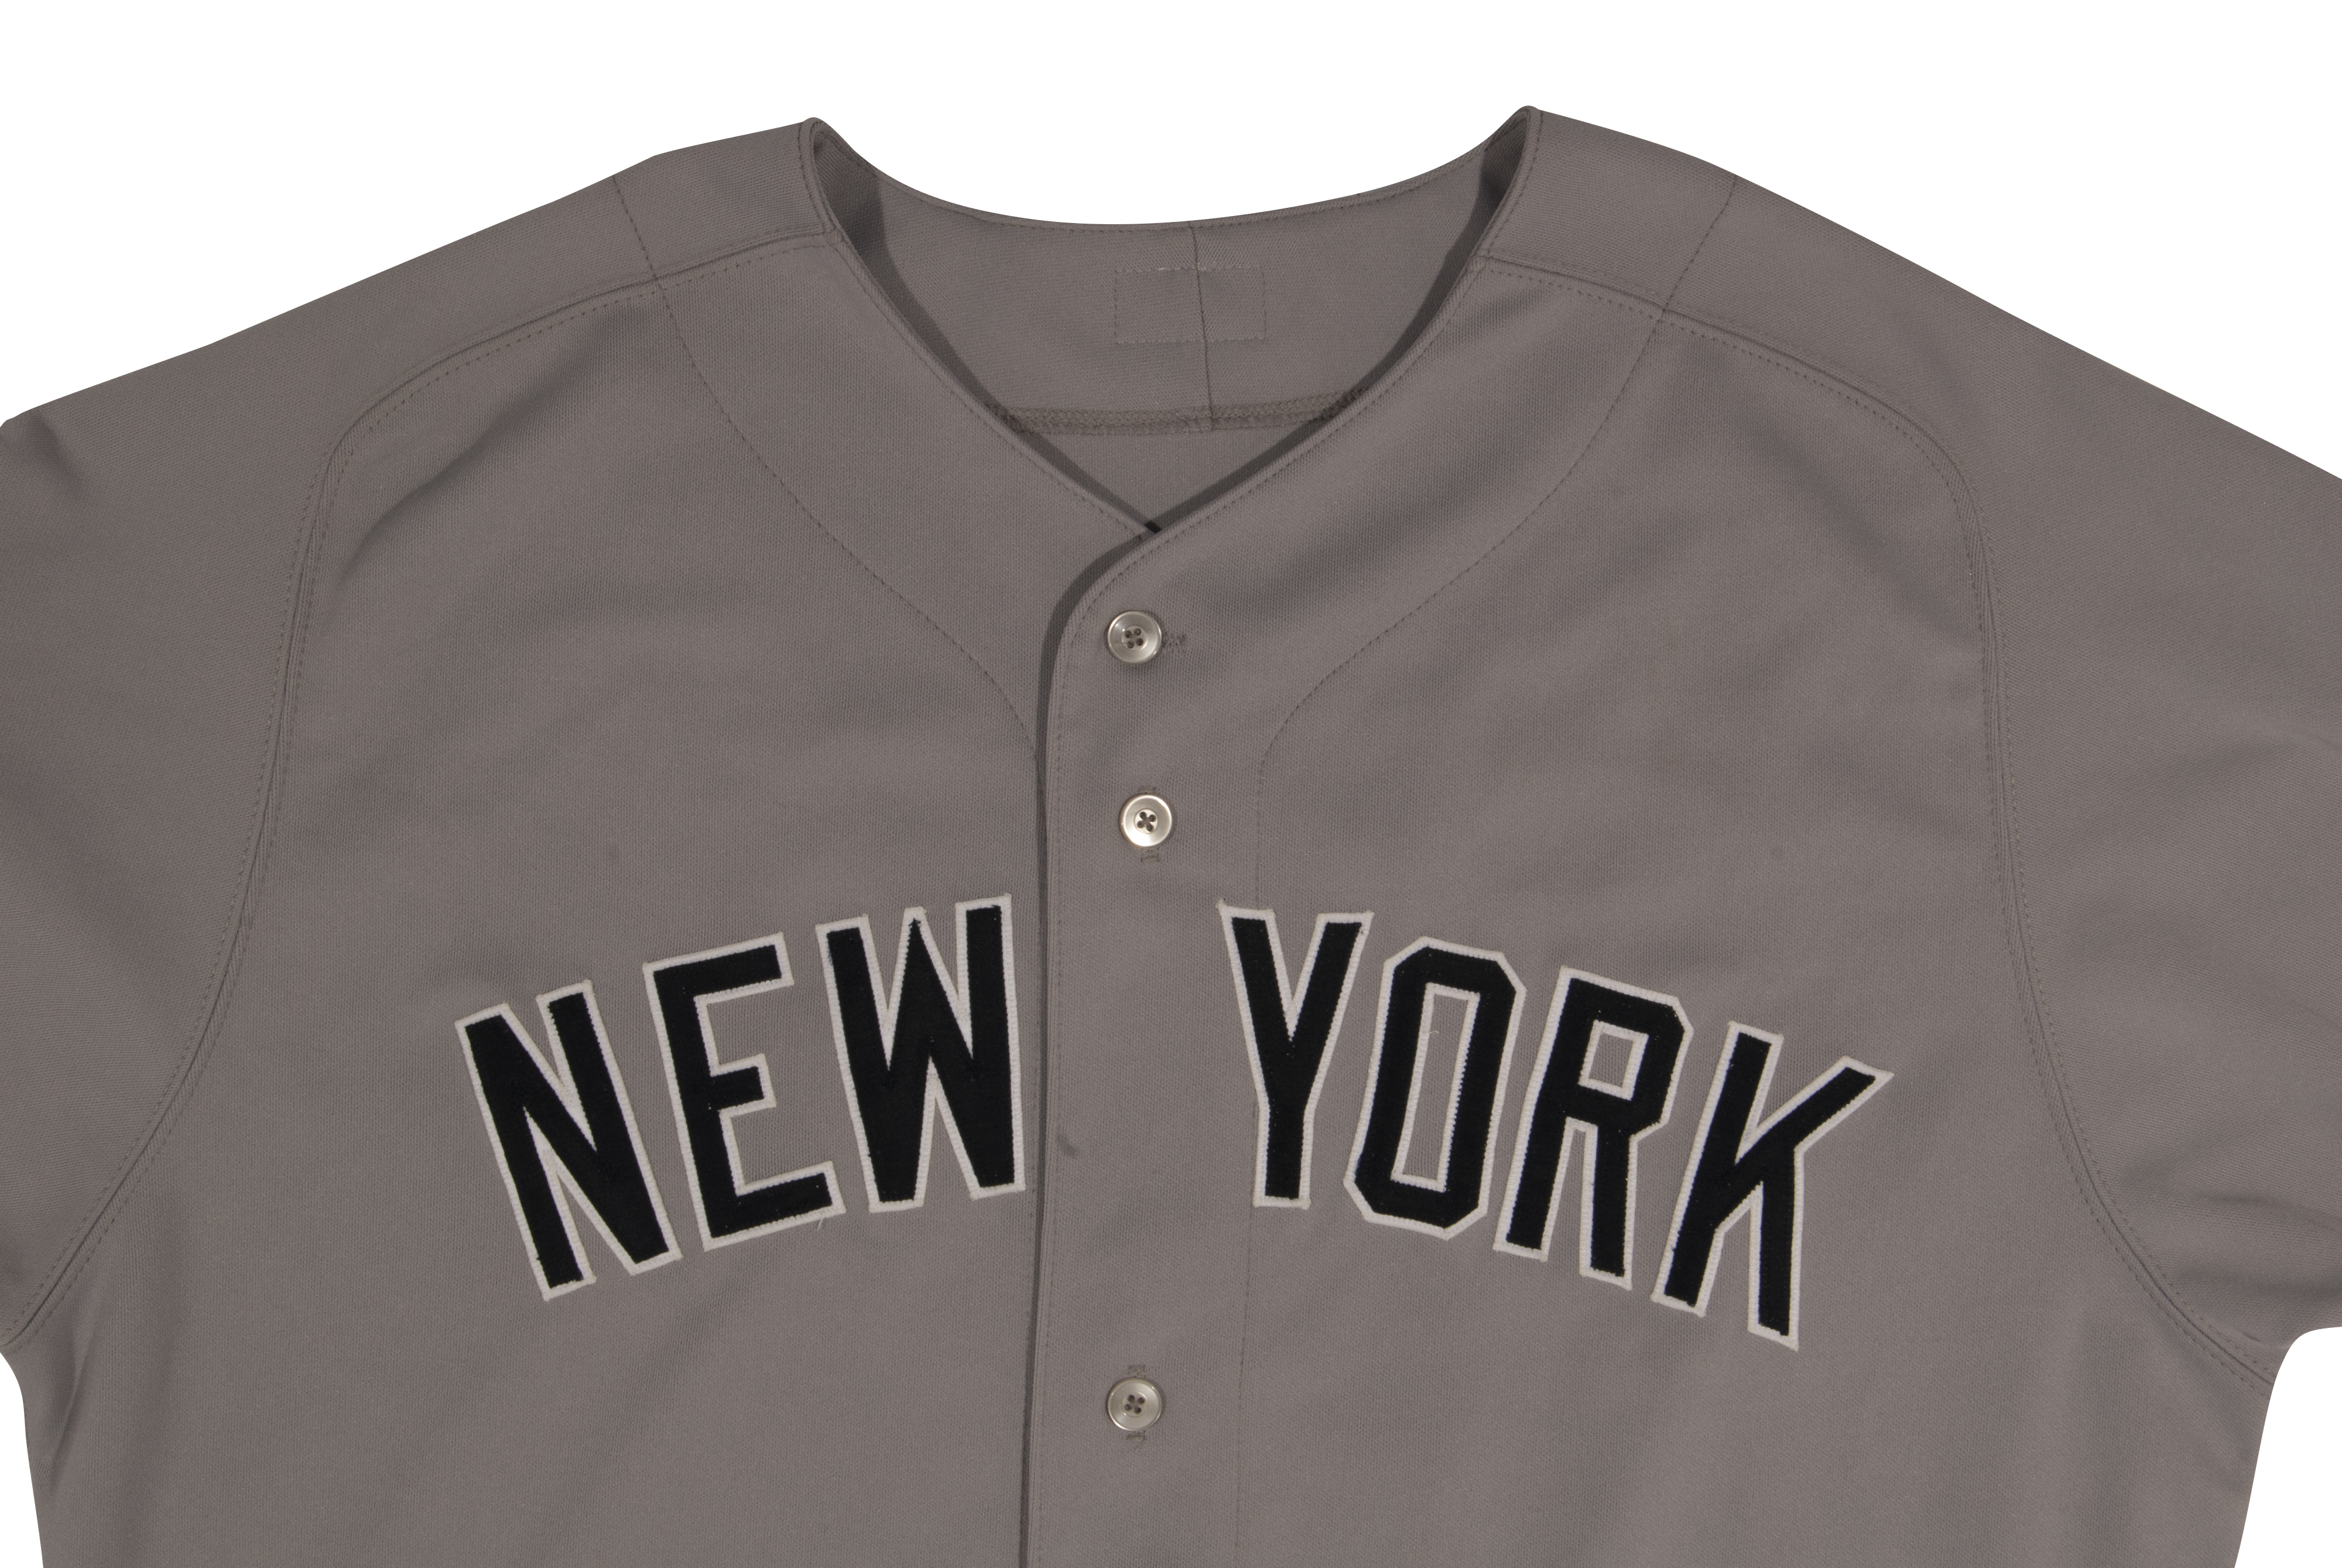 2009 Derek Jeter Autographed New York Yankees All-Star Game Worn